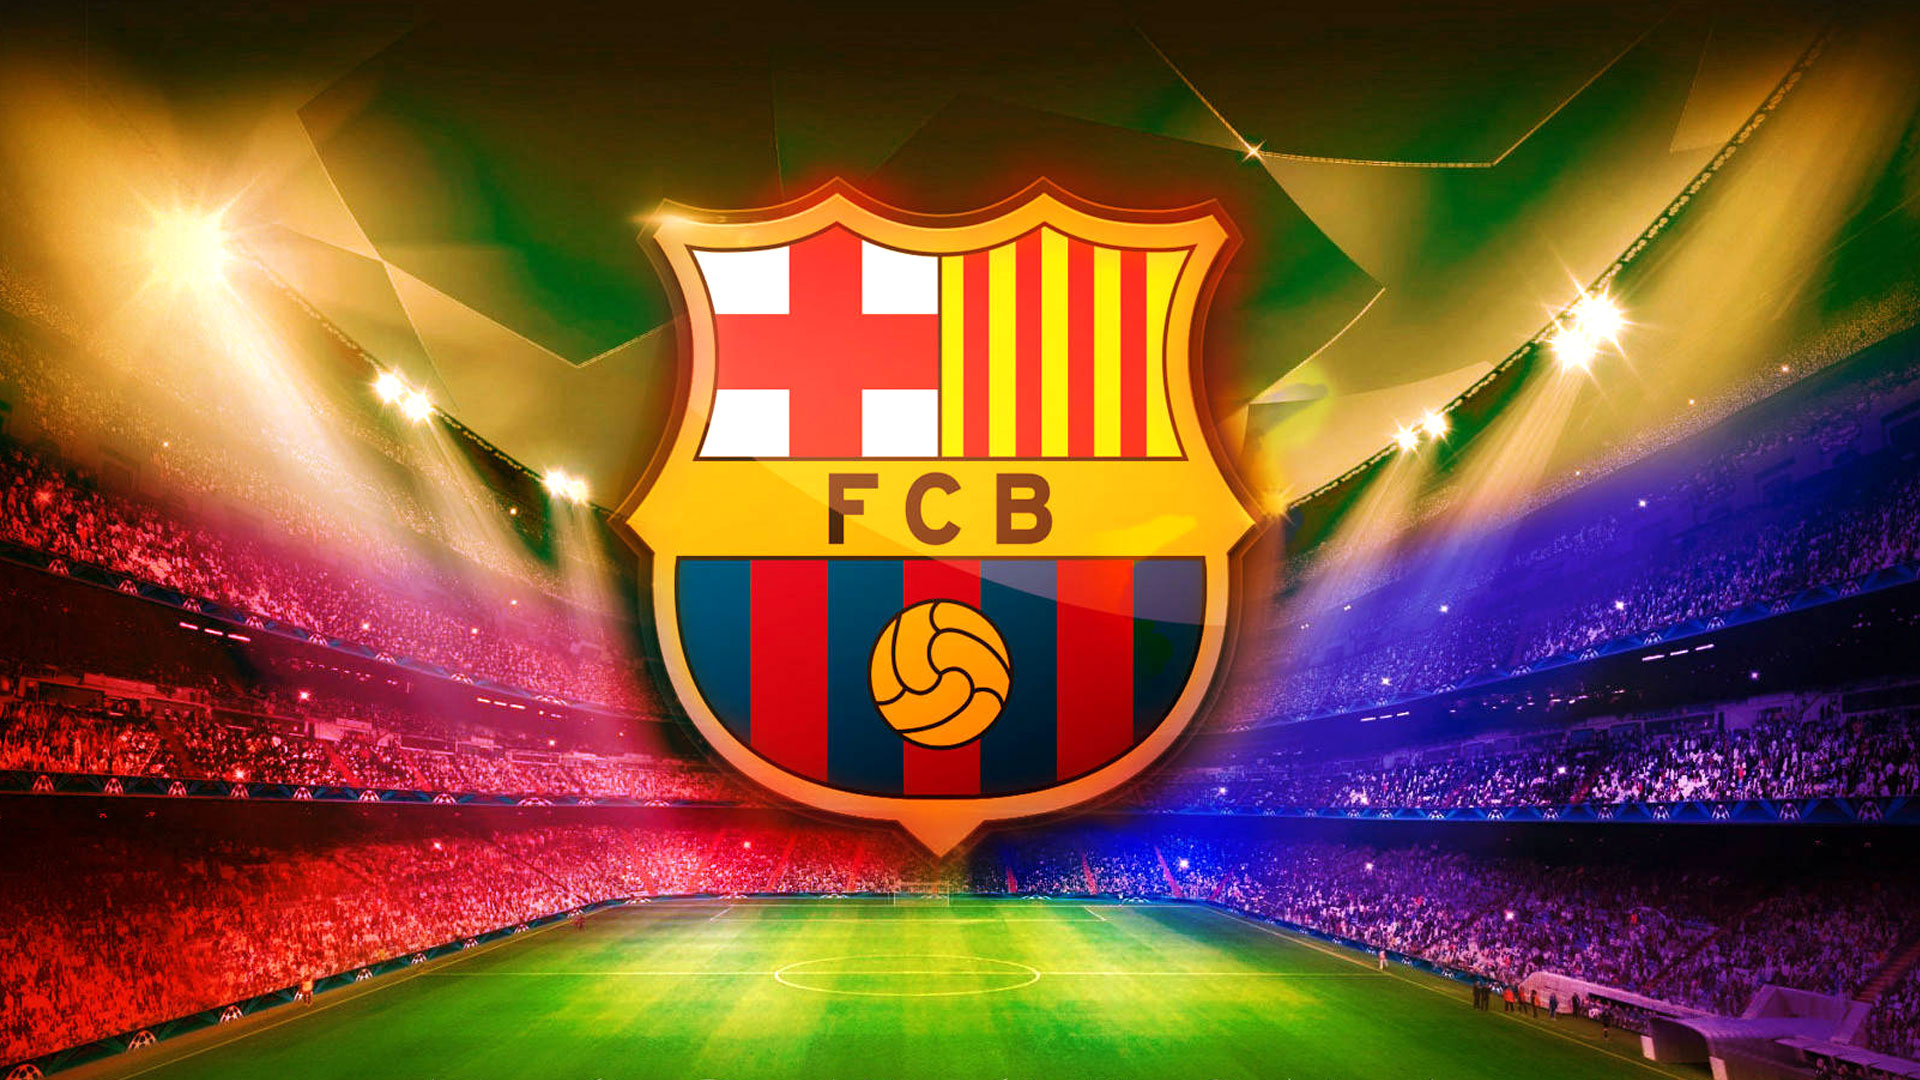 Barcelona logo, Wallpaper download, Football team, Sports branding, 1920x1080 Full HD Desktop